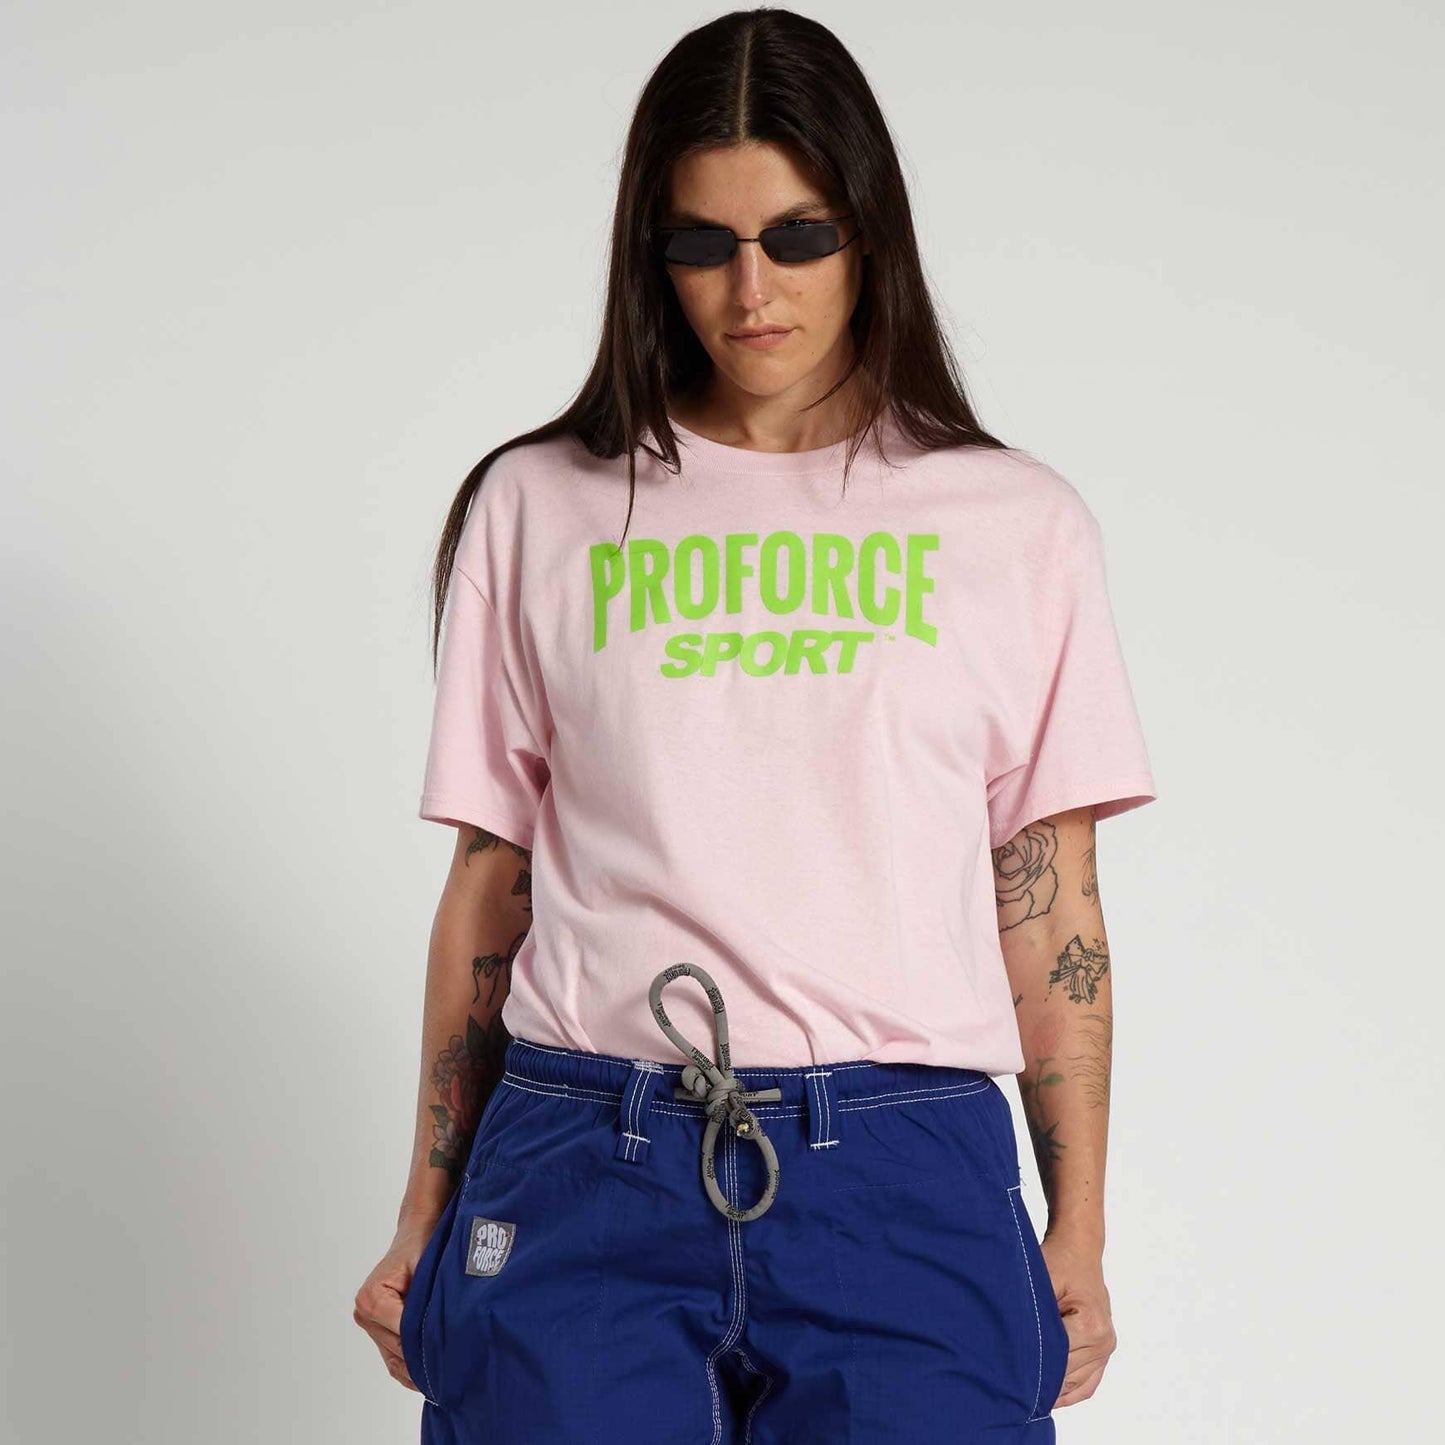 ProForce Sport Logo T-Shirt - Violent Art Shop